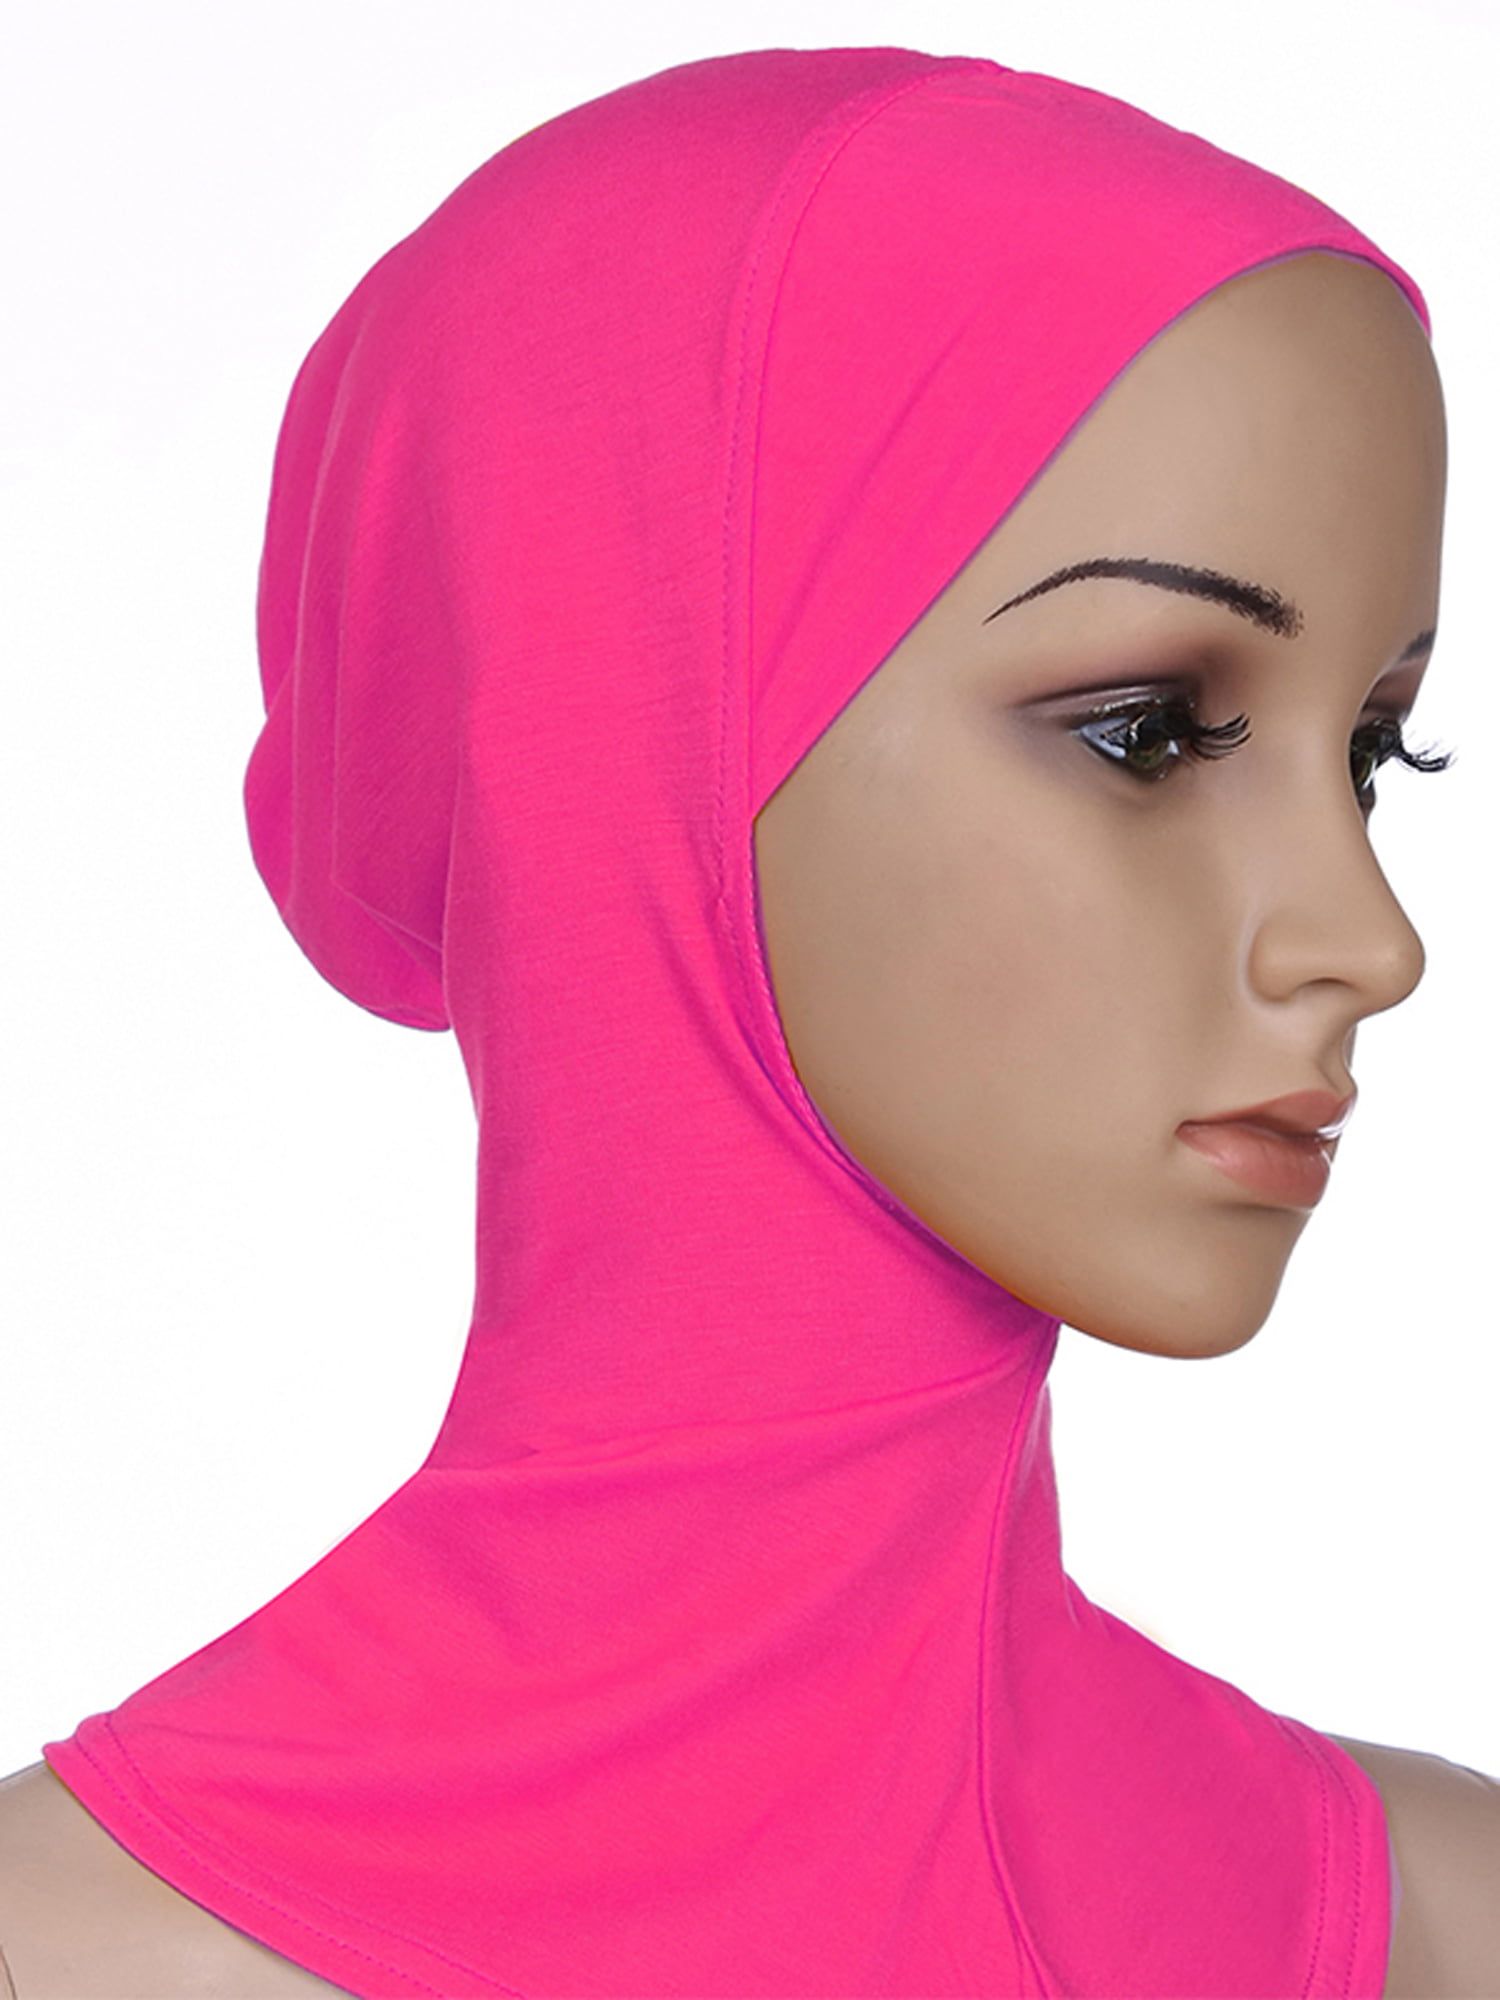 Cotton Tube Underscarf Cap NEW Hijab Shayla Muslim 3 pcs lot 